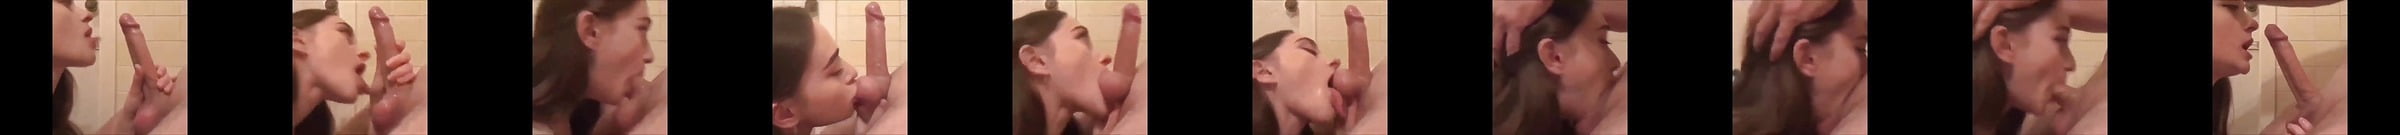 Featured Amateur Shower Head Insertion Porn Videos Xhamster